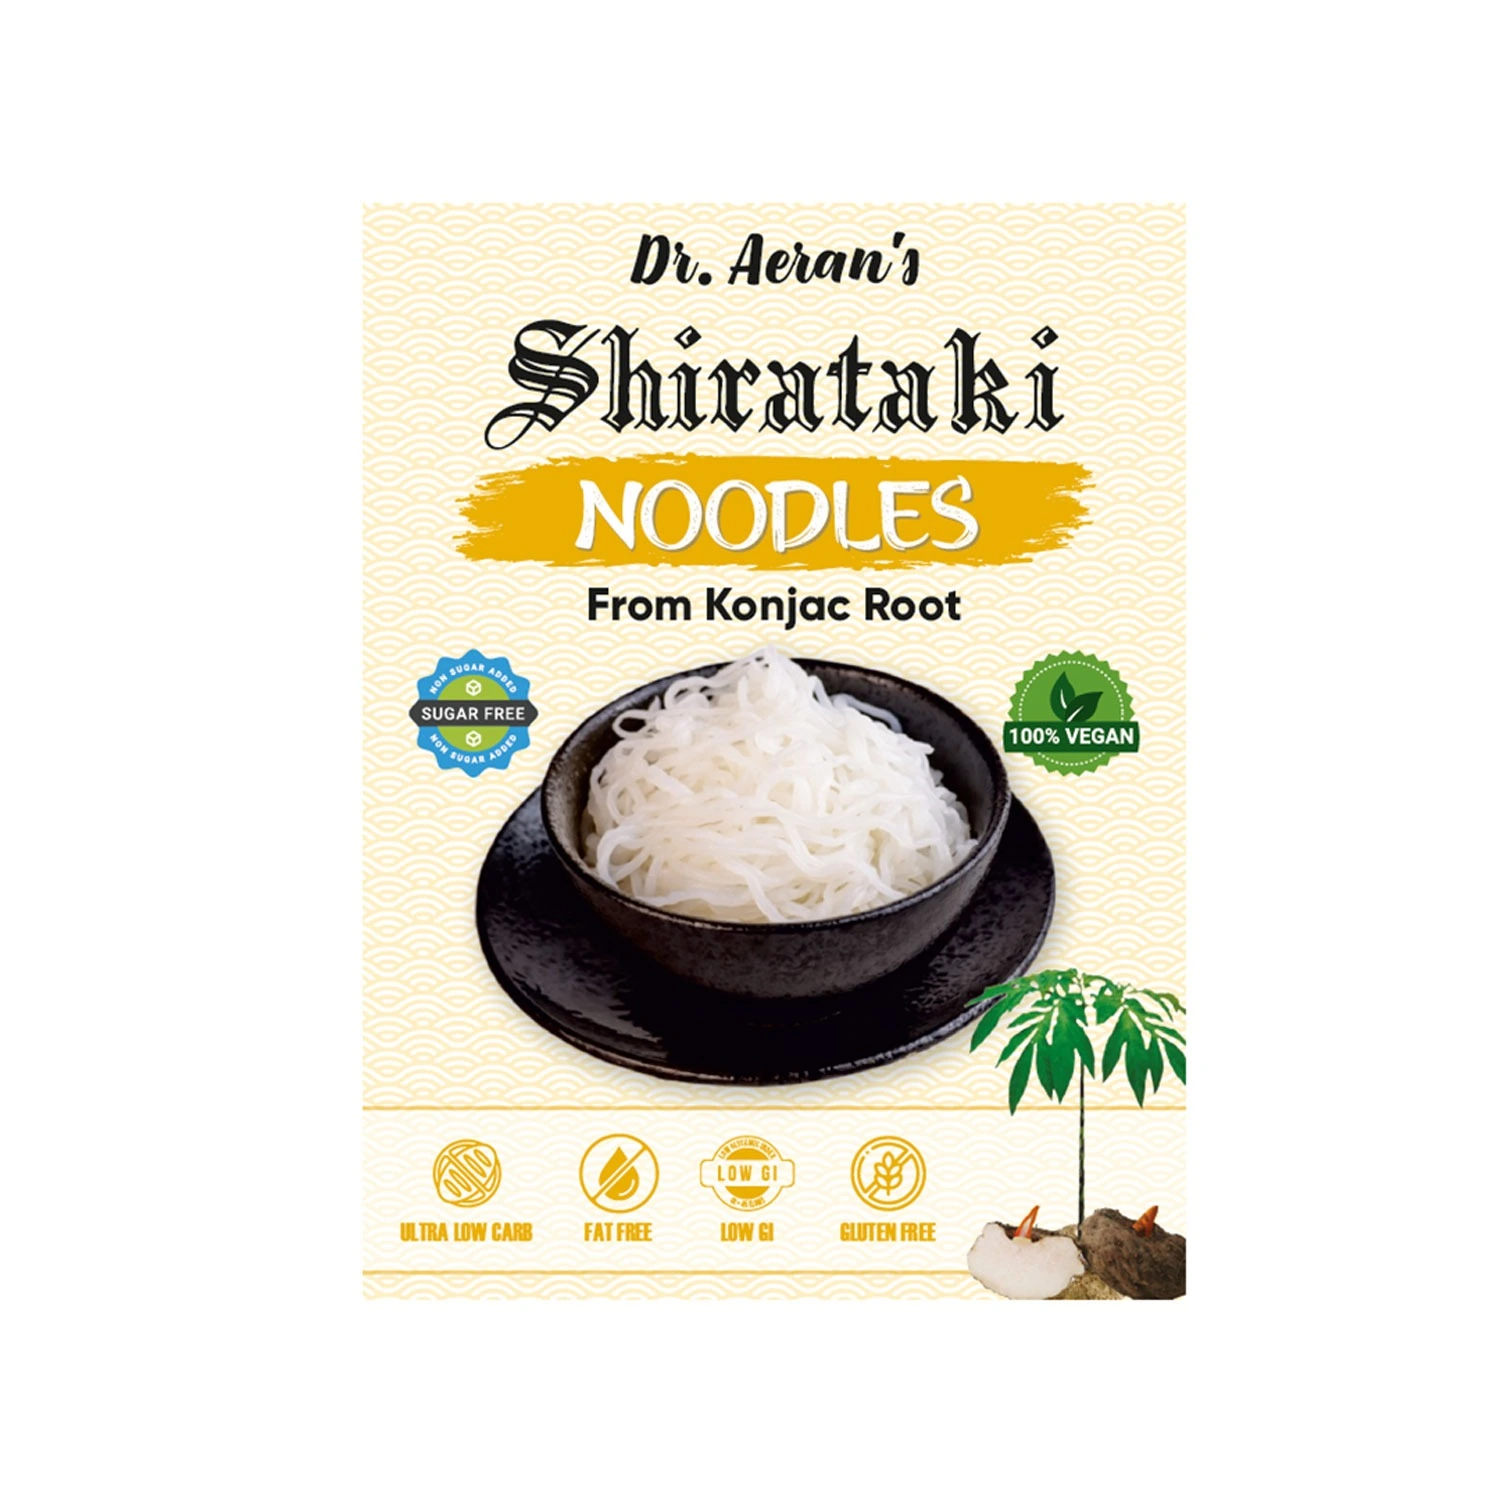 shirataki low carb noodles, shirataki noodles, shirataki noodles nutrition, shirataki noodles online, keto friendly food, low carb diet foods, gluten free, Fat free, Diabetic friendly